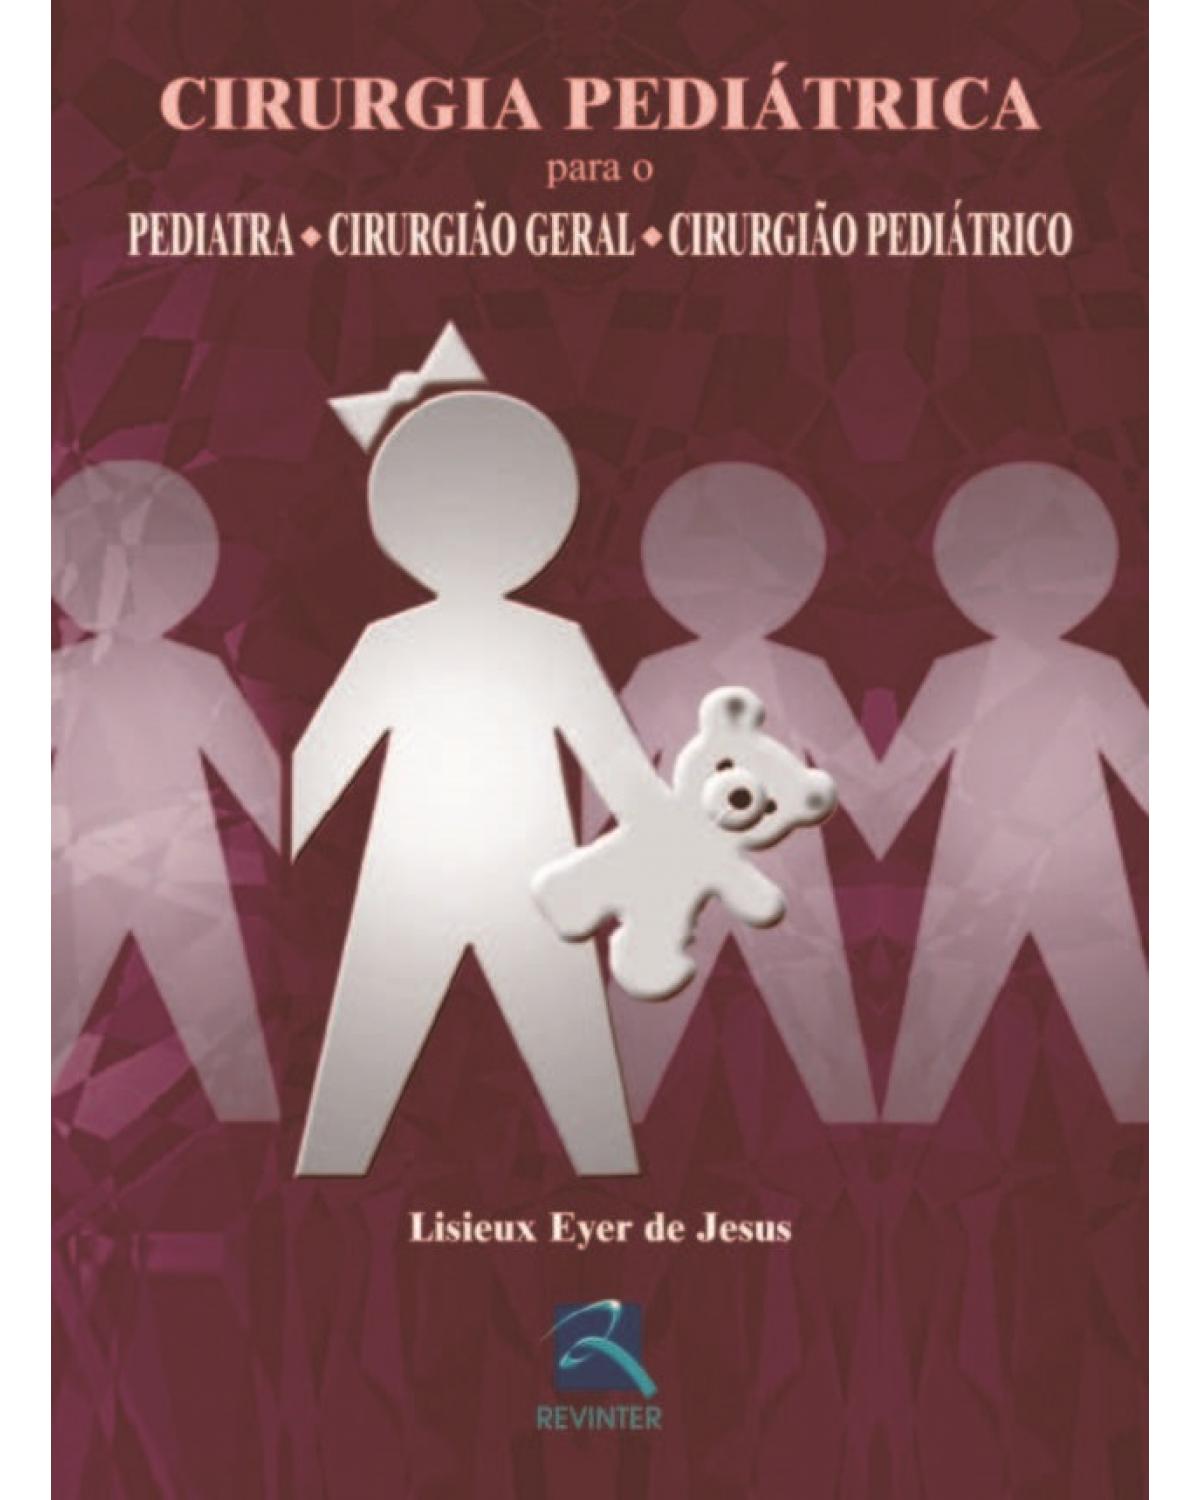 Cirurgia pediátrica para o pediatra, cirurgião geral, cirurgião pediátrico - 1ª Edição | 2003